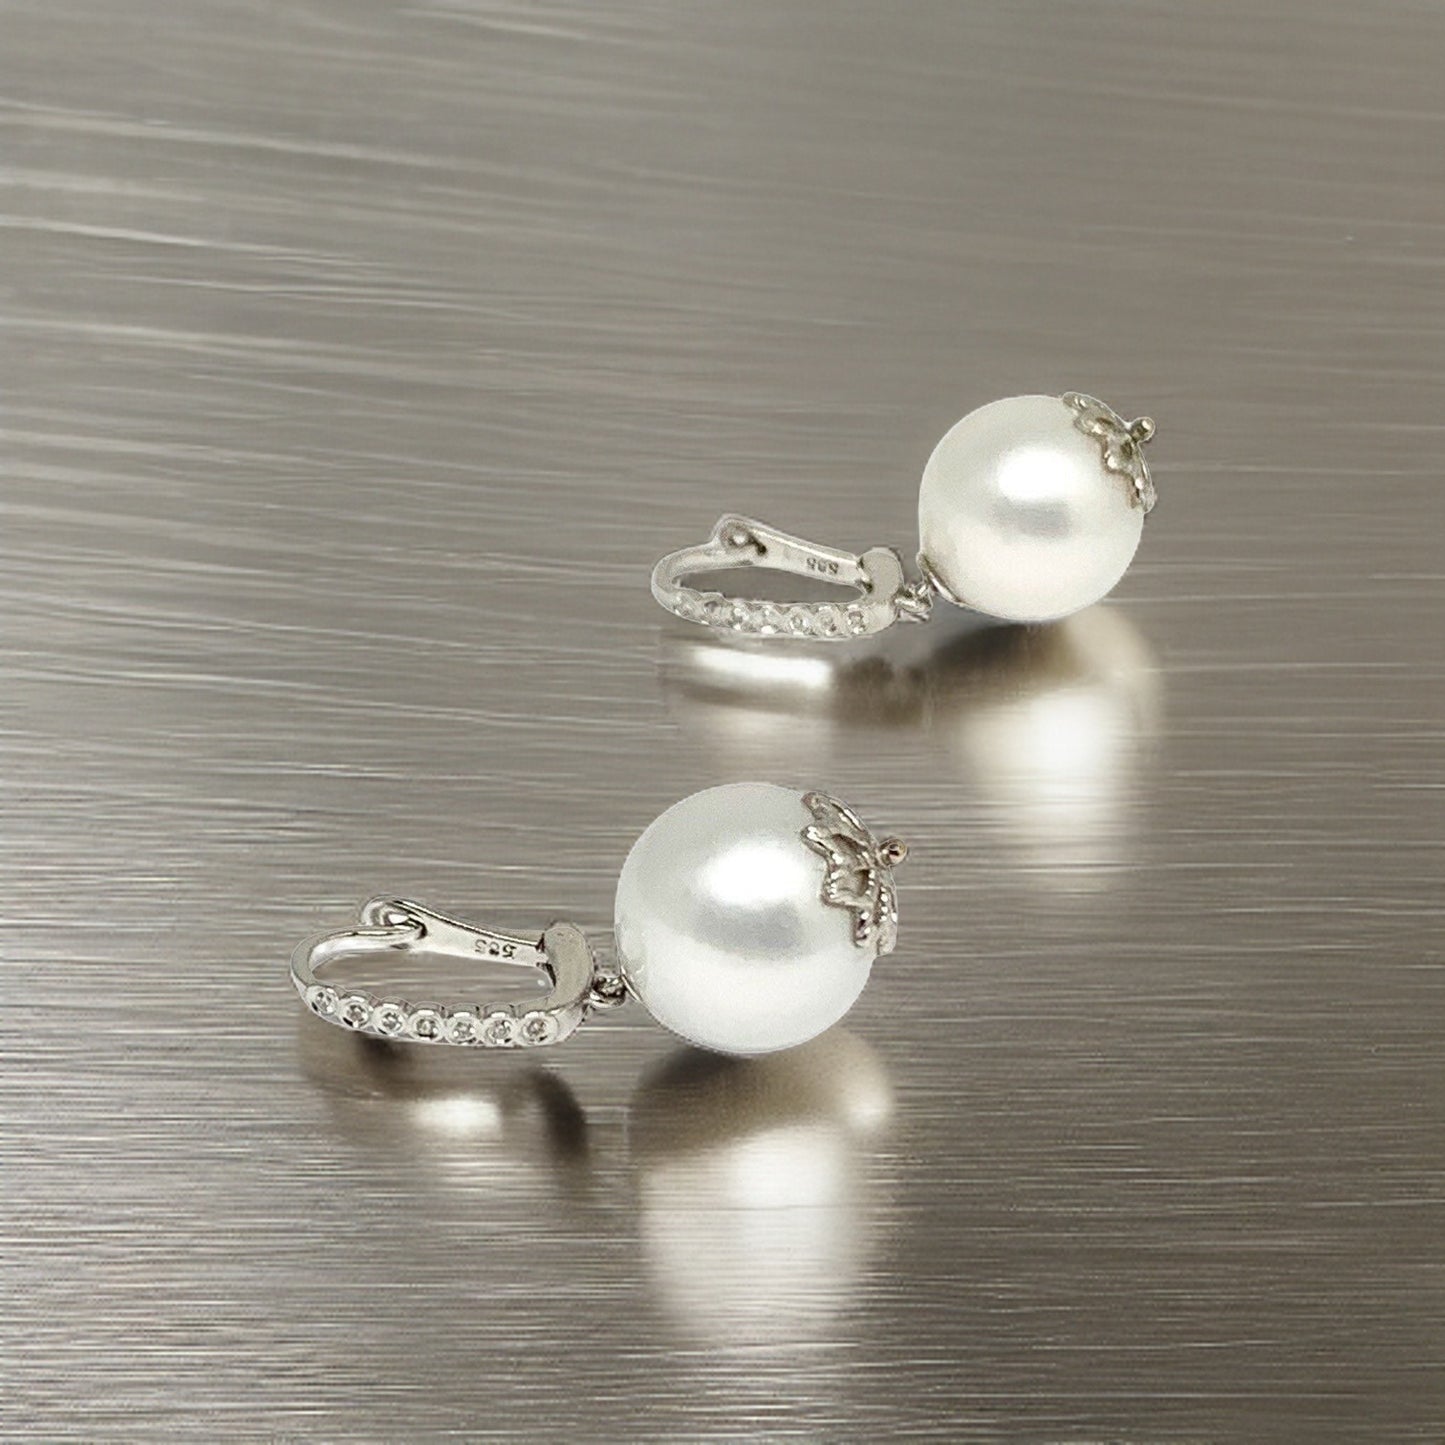 Diamond Large South Sea Pearl Earrings 14k Gold 13 mm Certified $4,950 915306